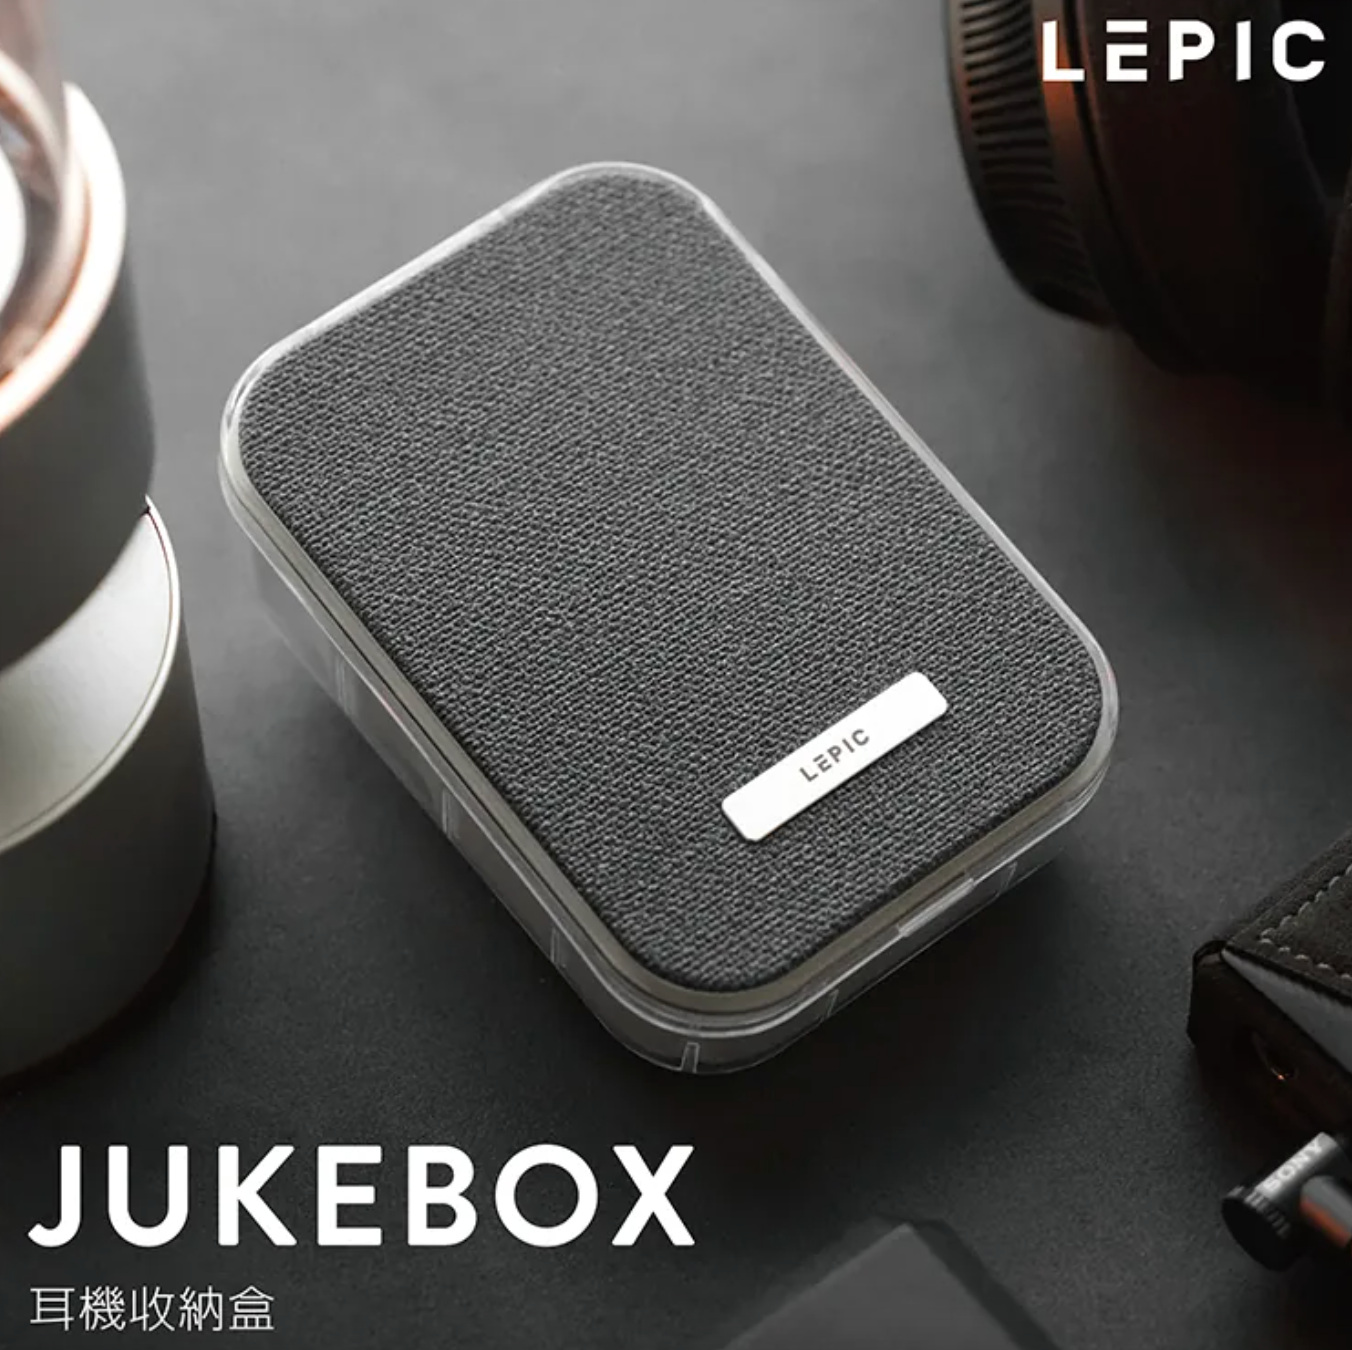 Lepic Jukebox 耳機保護盒